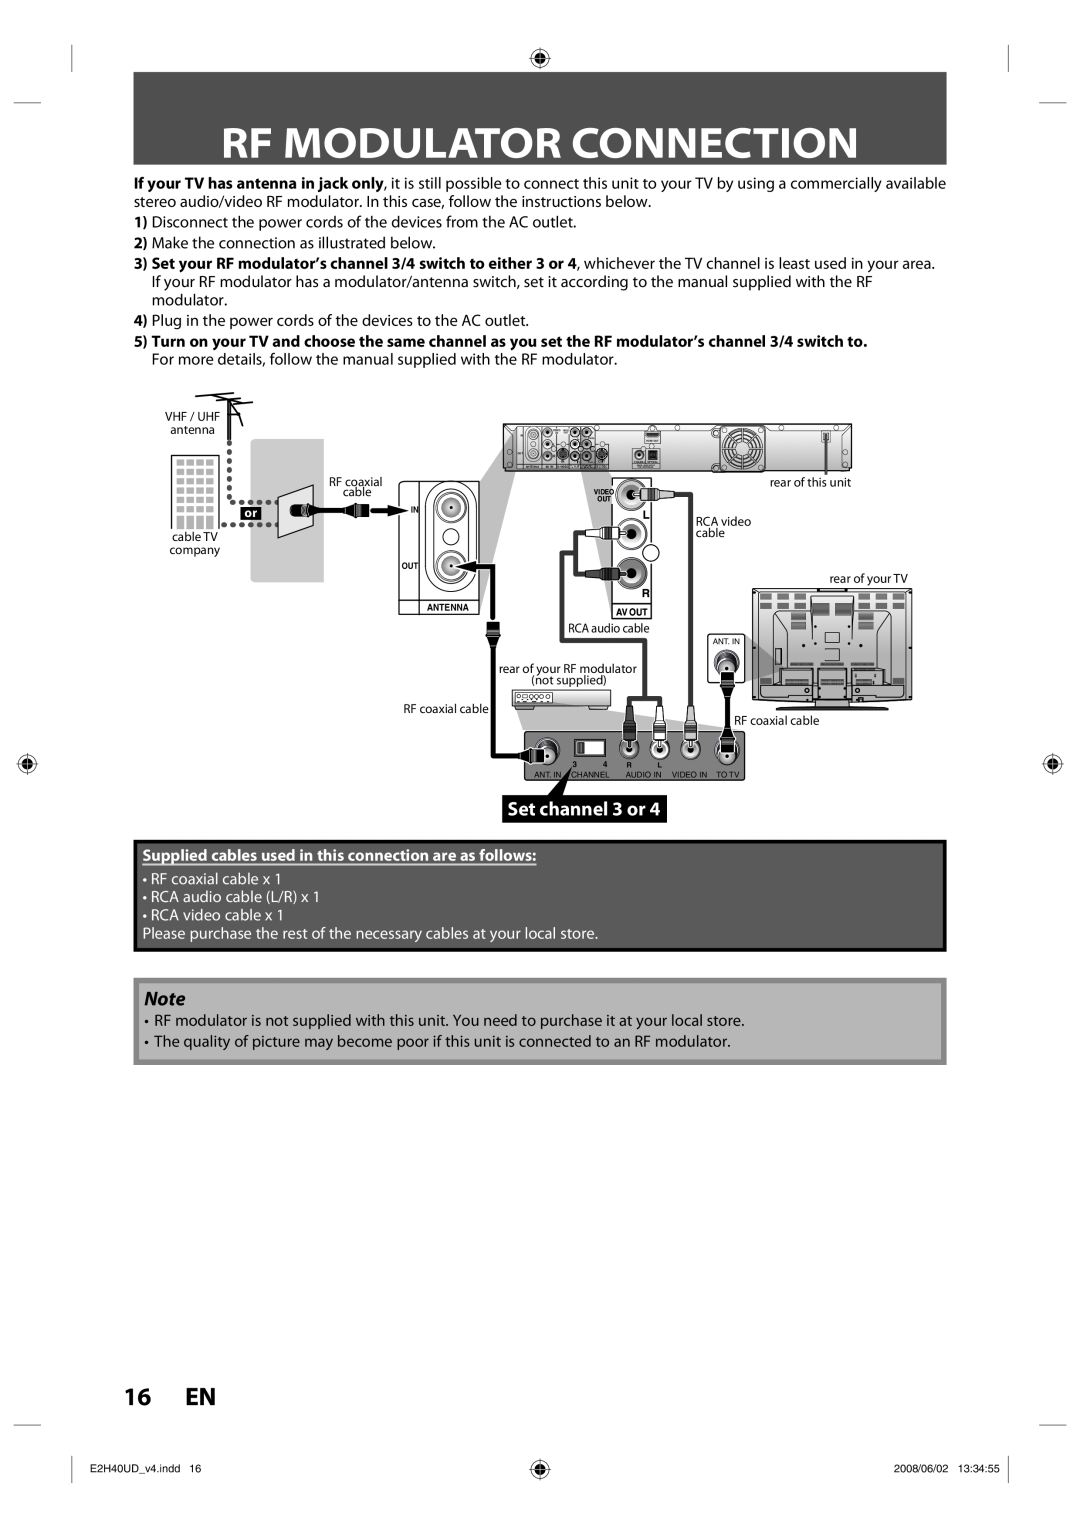 Philips DVDR3575H/37 manual Rf Modulator Connection, 16 EN, Set channel 3 or 